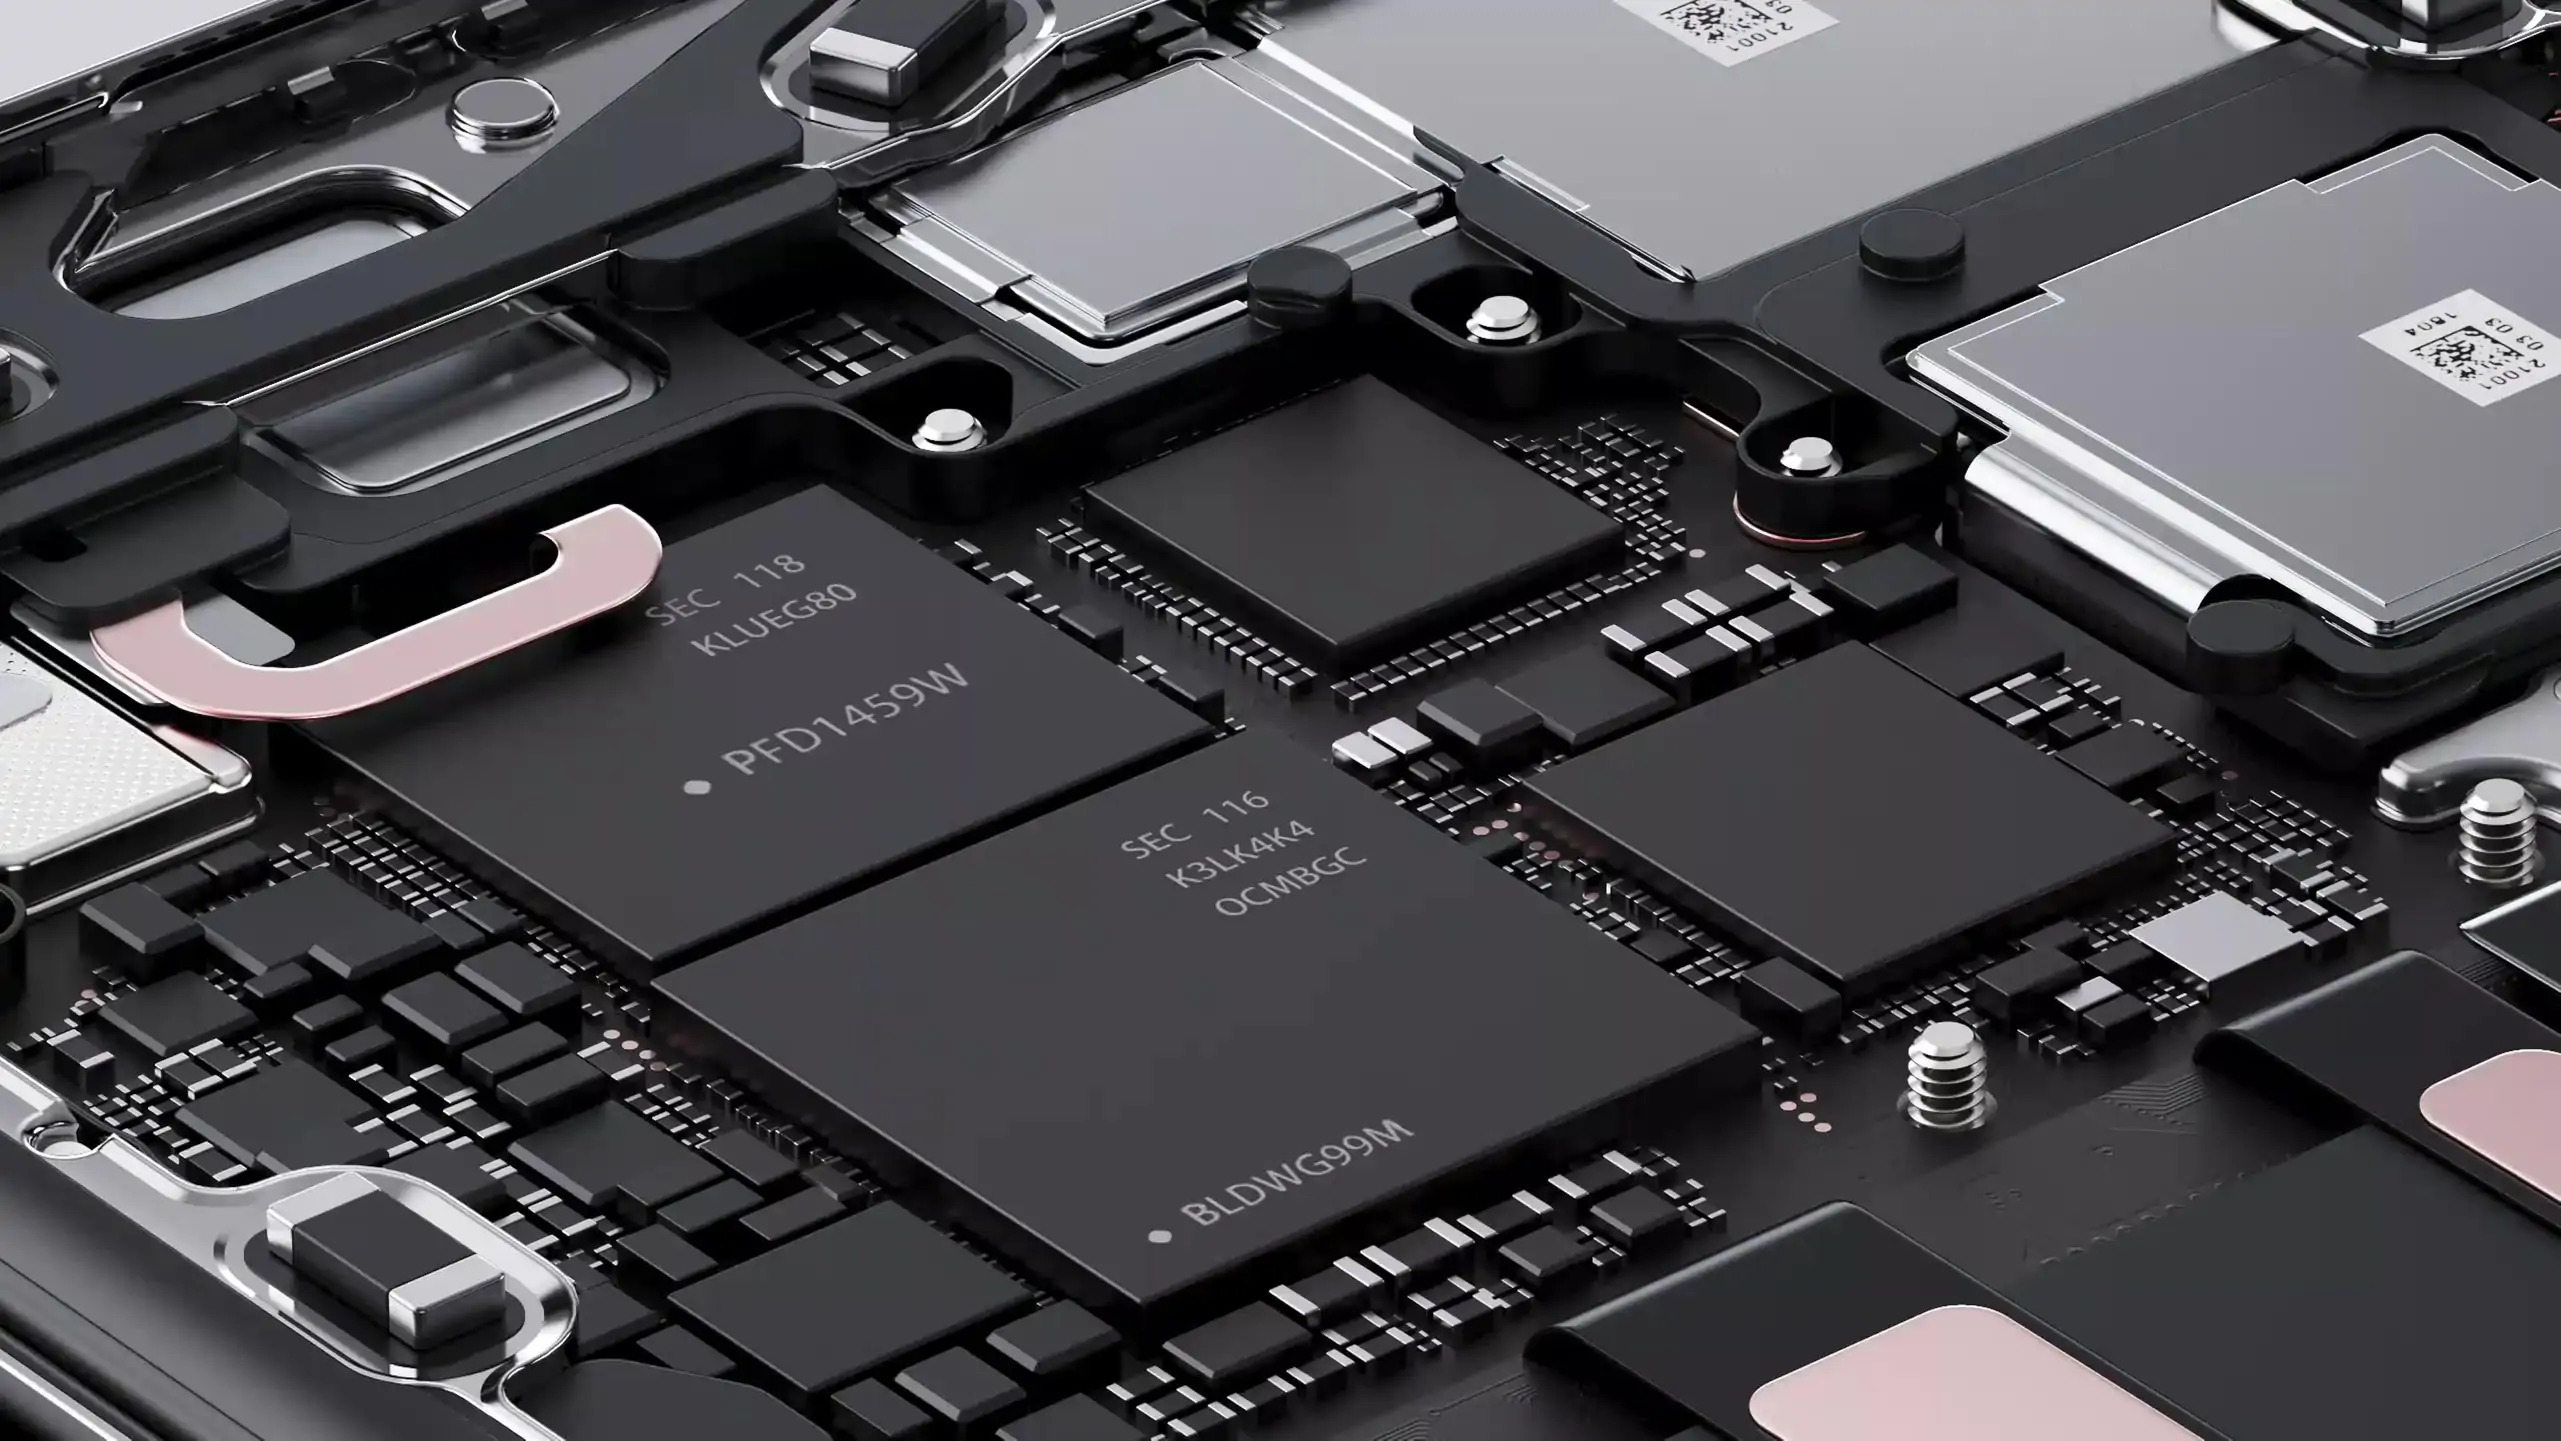 Oppo Find X5 Pro 5G Dual 256GB 12GB RAM desbloqueado de fábrica